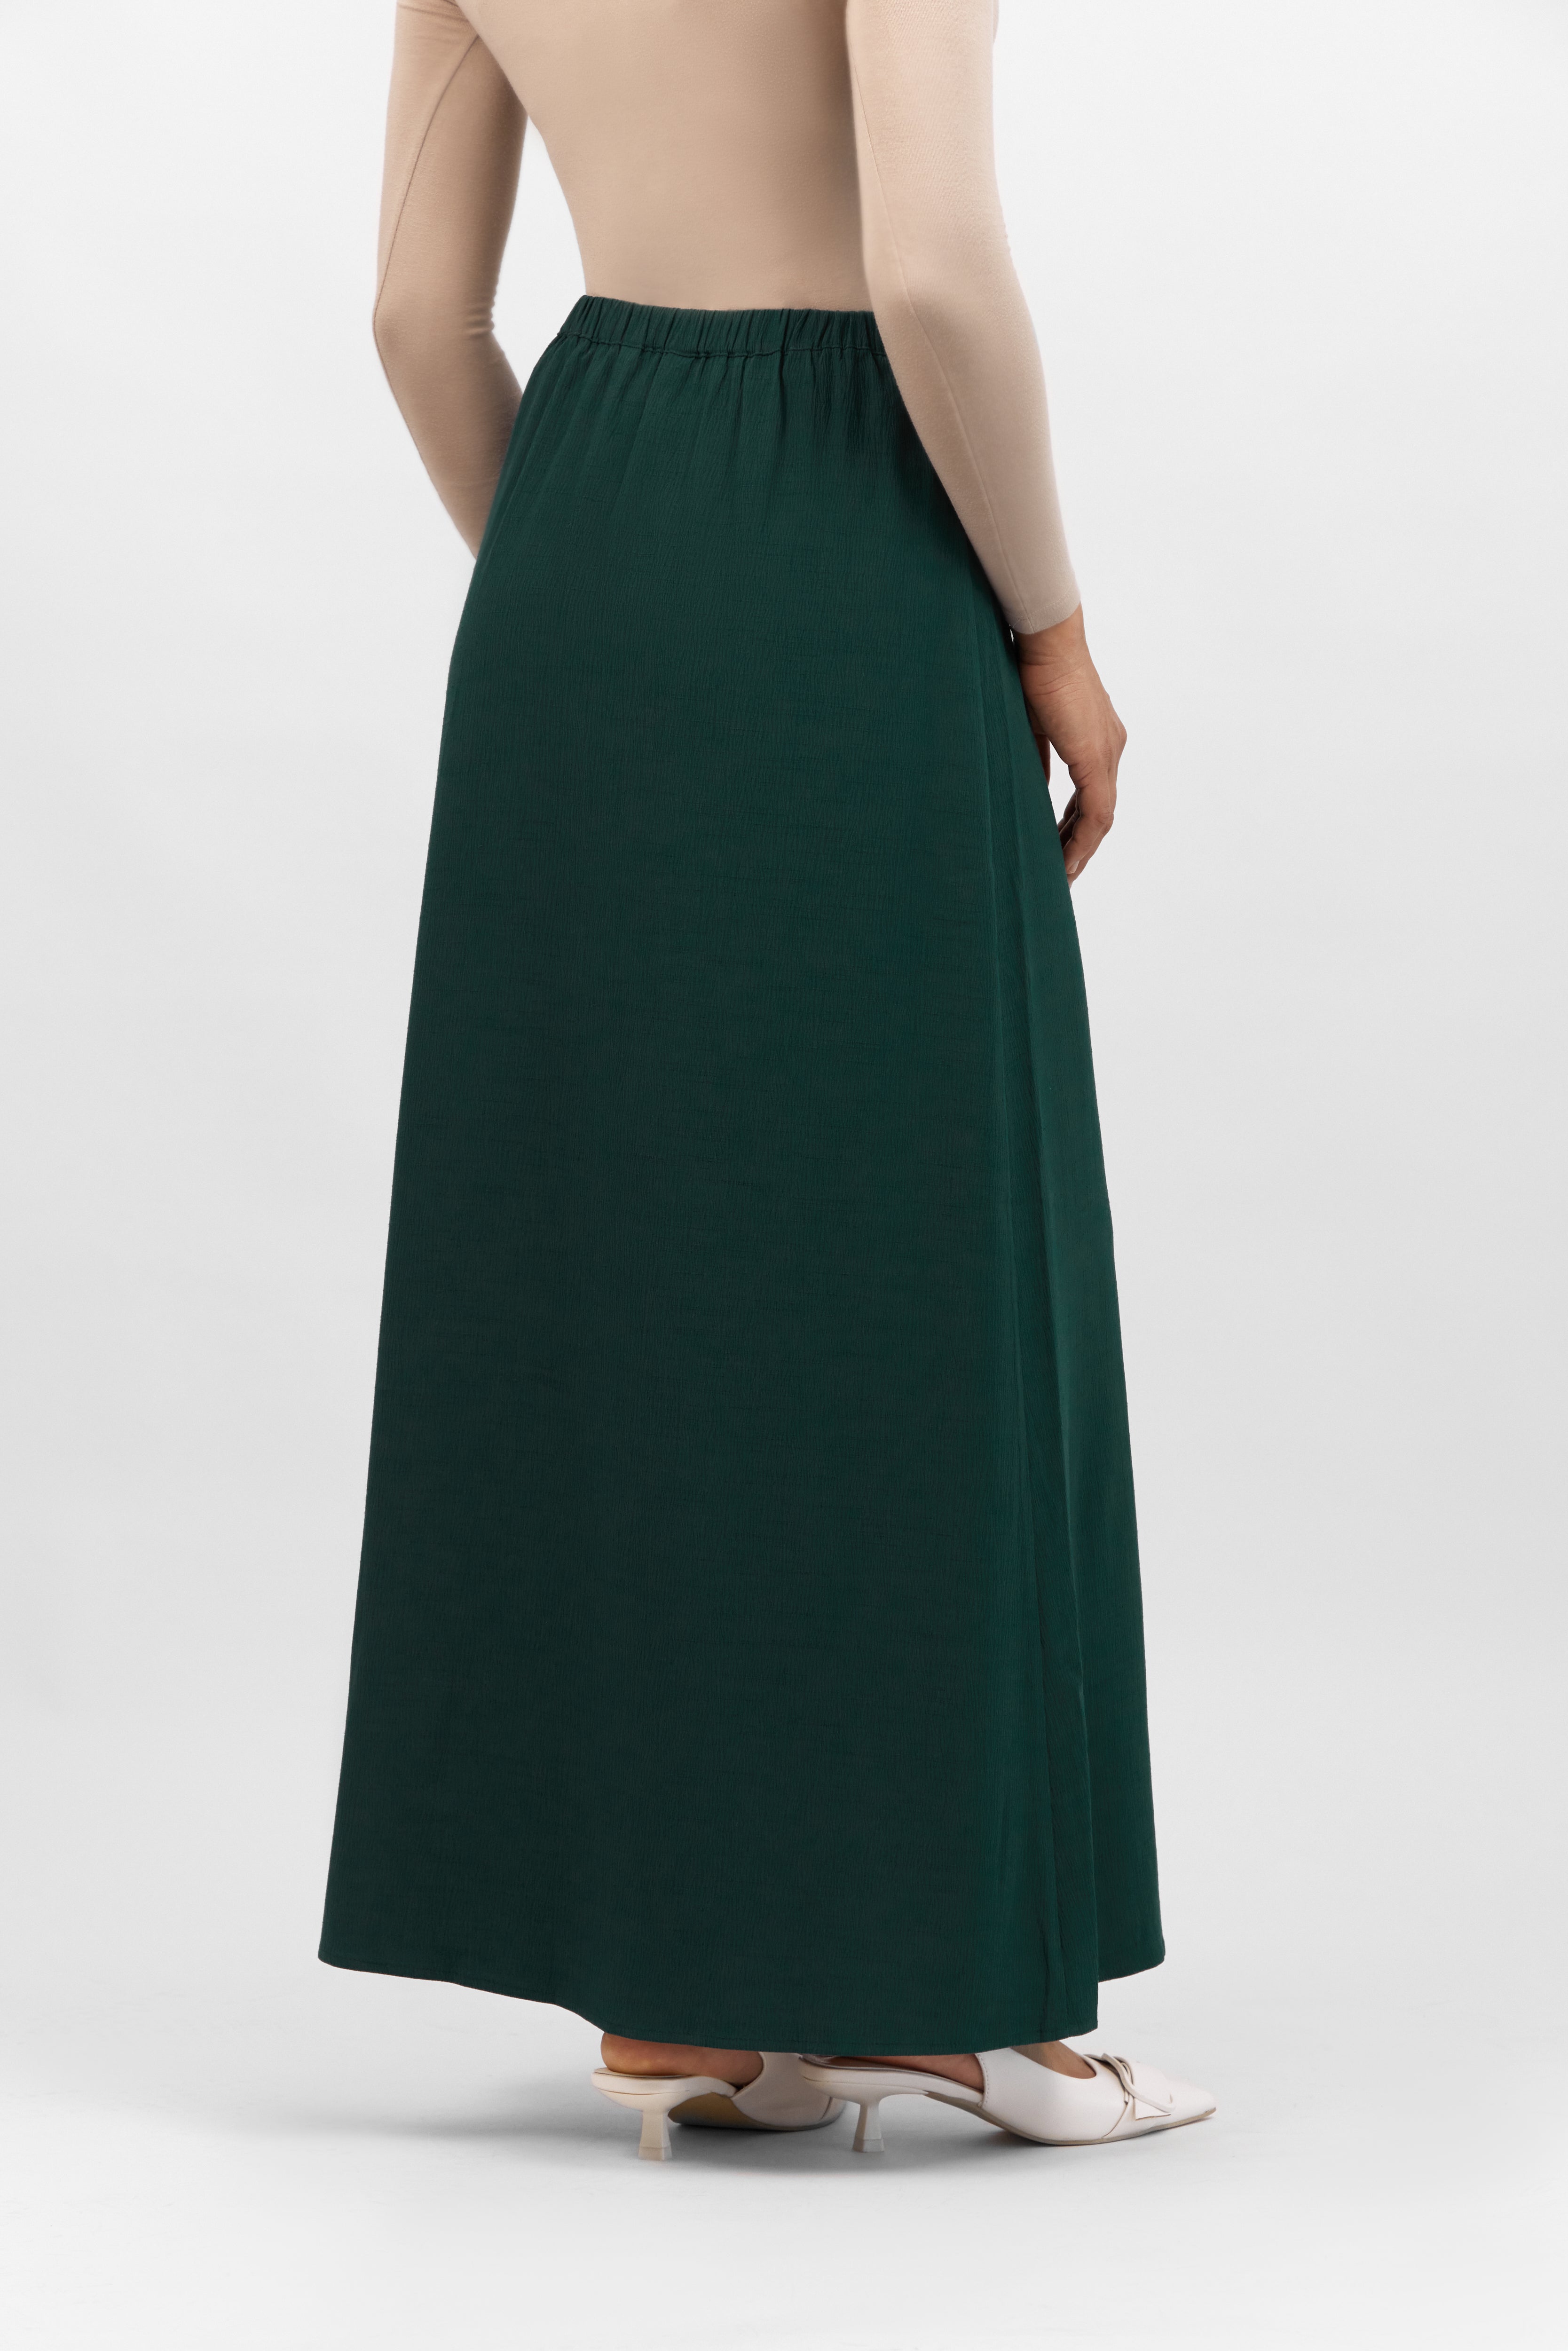 US - Flowy Maxi Skirt - Emerald